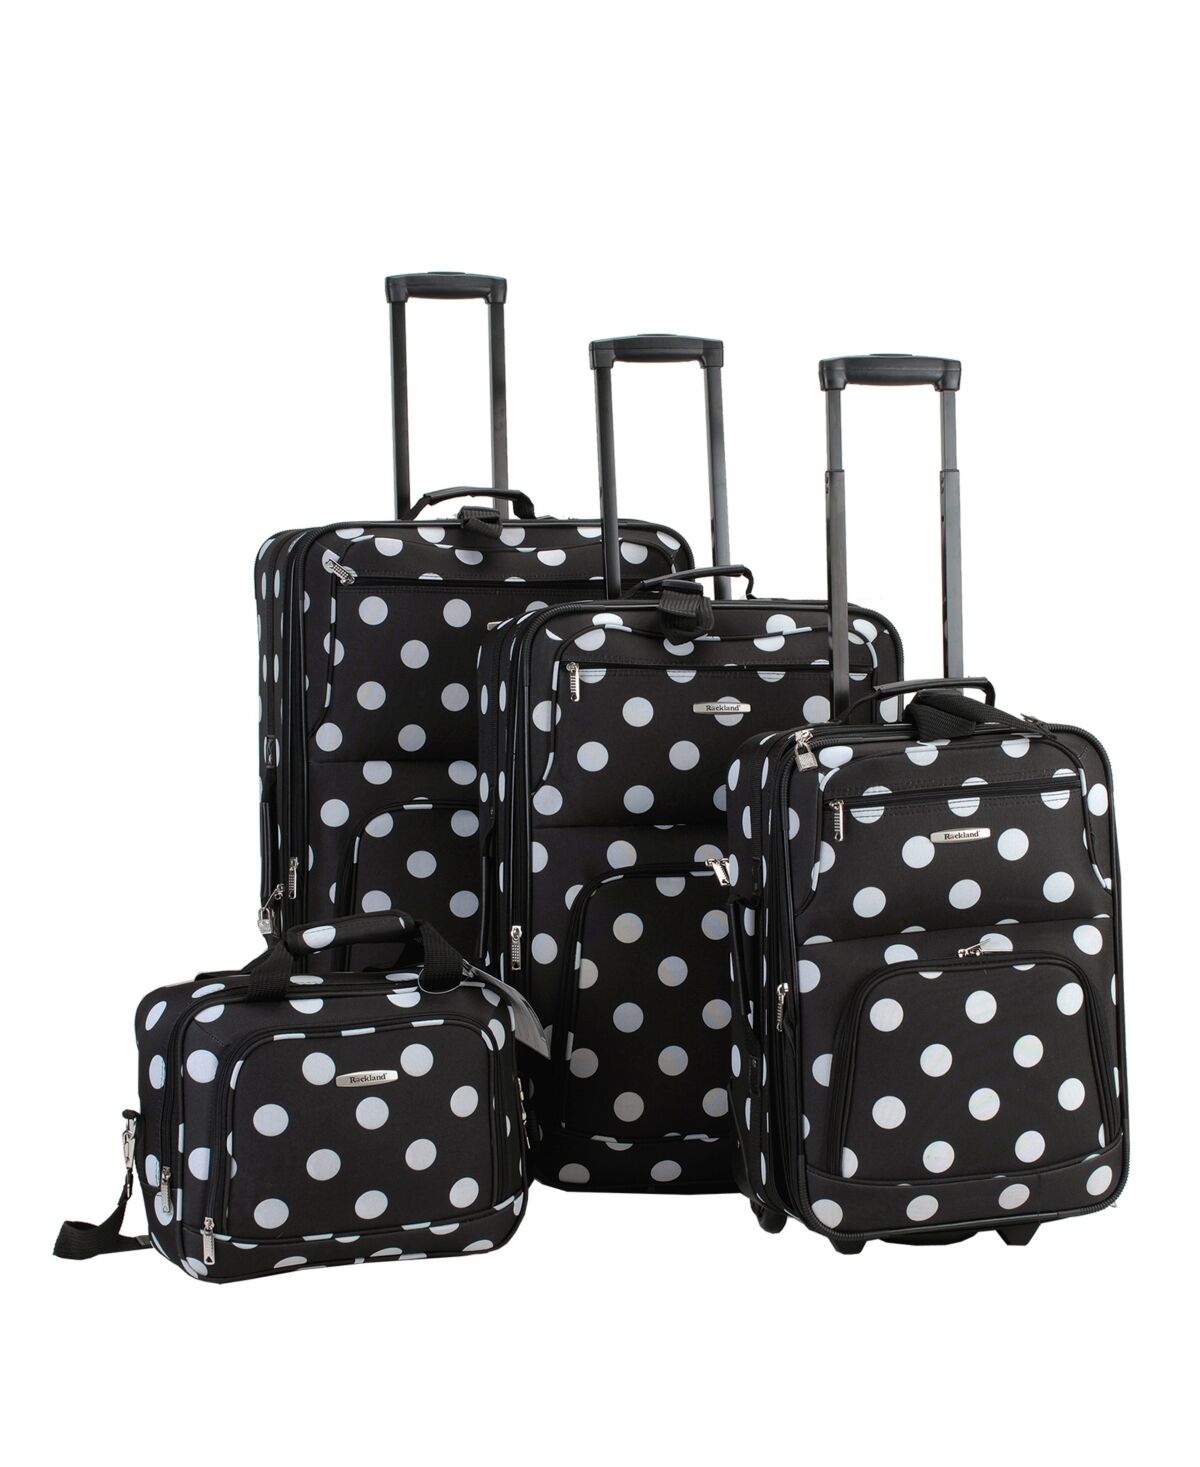 Rockland 4-Pc. Softside Luggage Set - Polka Dot